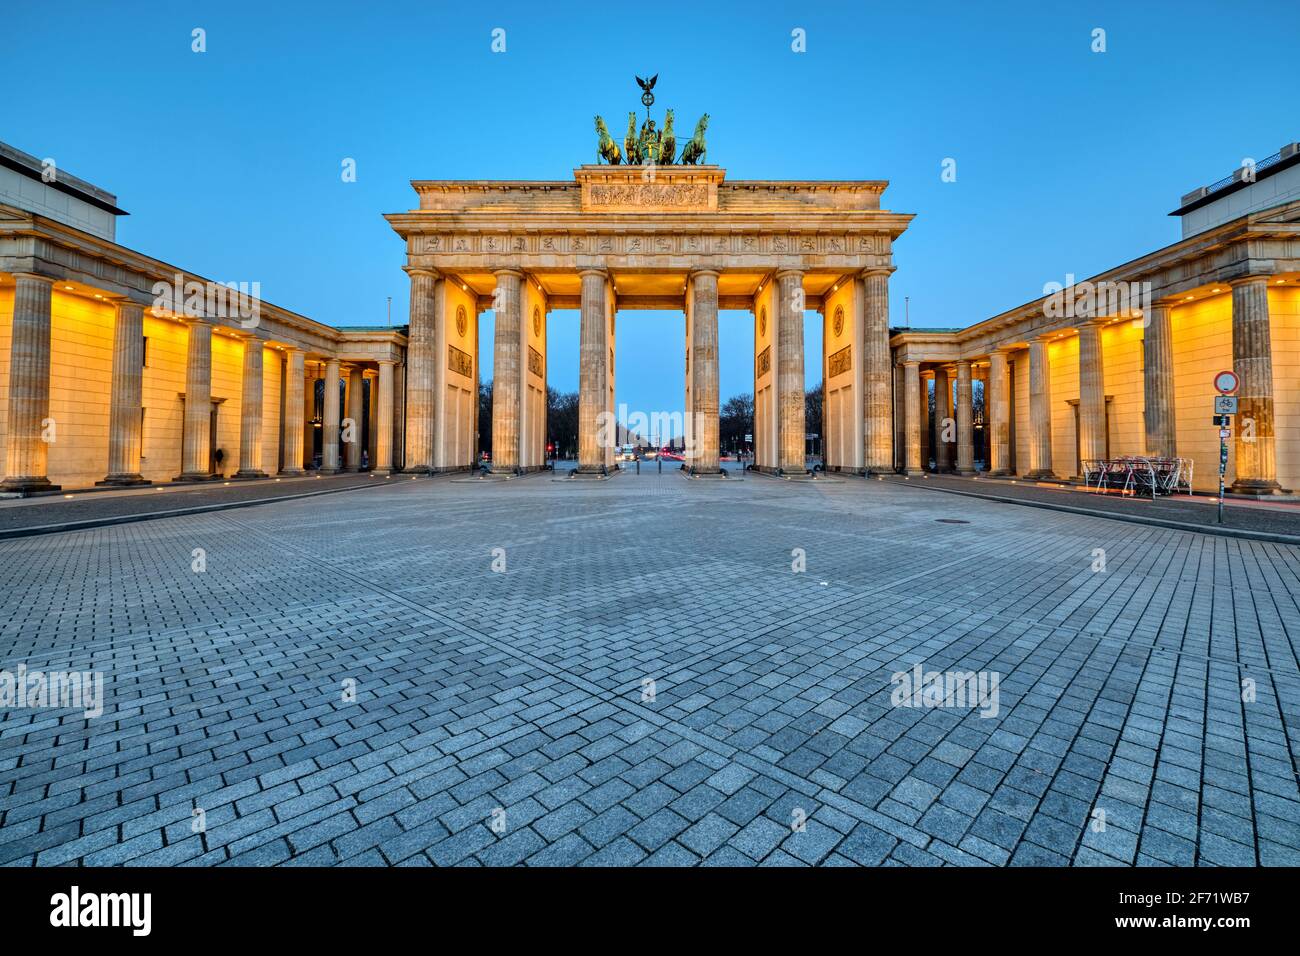 The illuminated Brandenburg Gate in Berlin at dawn Stock Photo